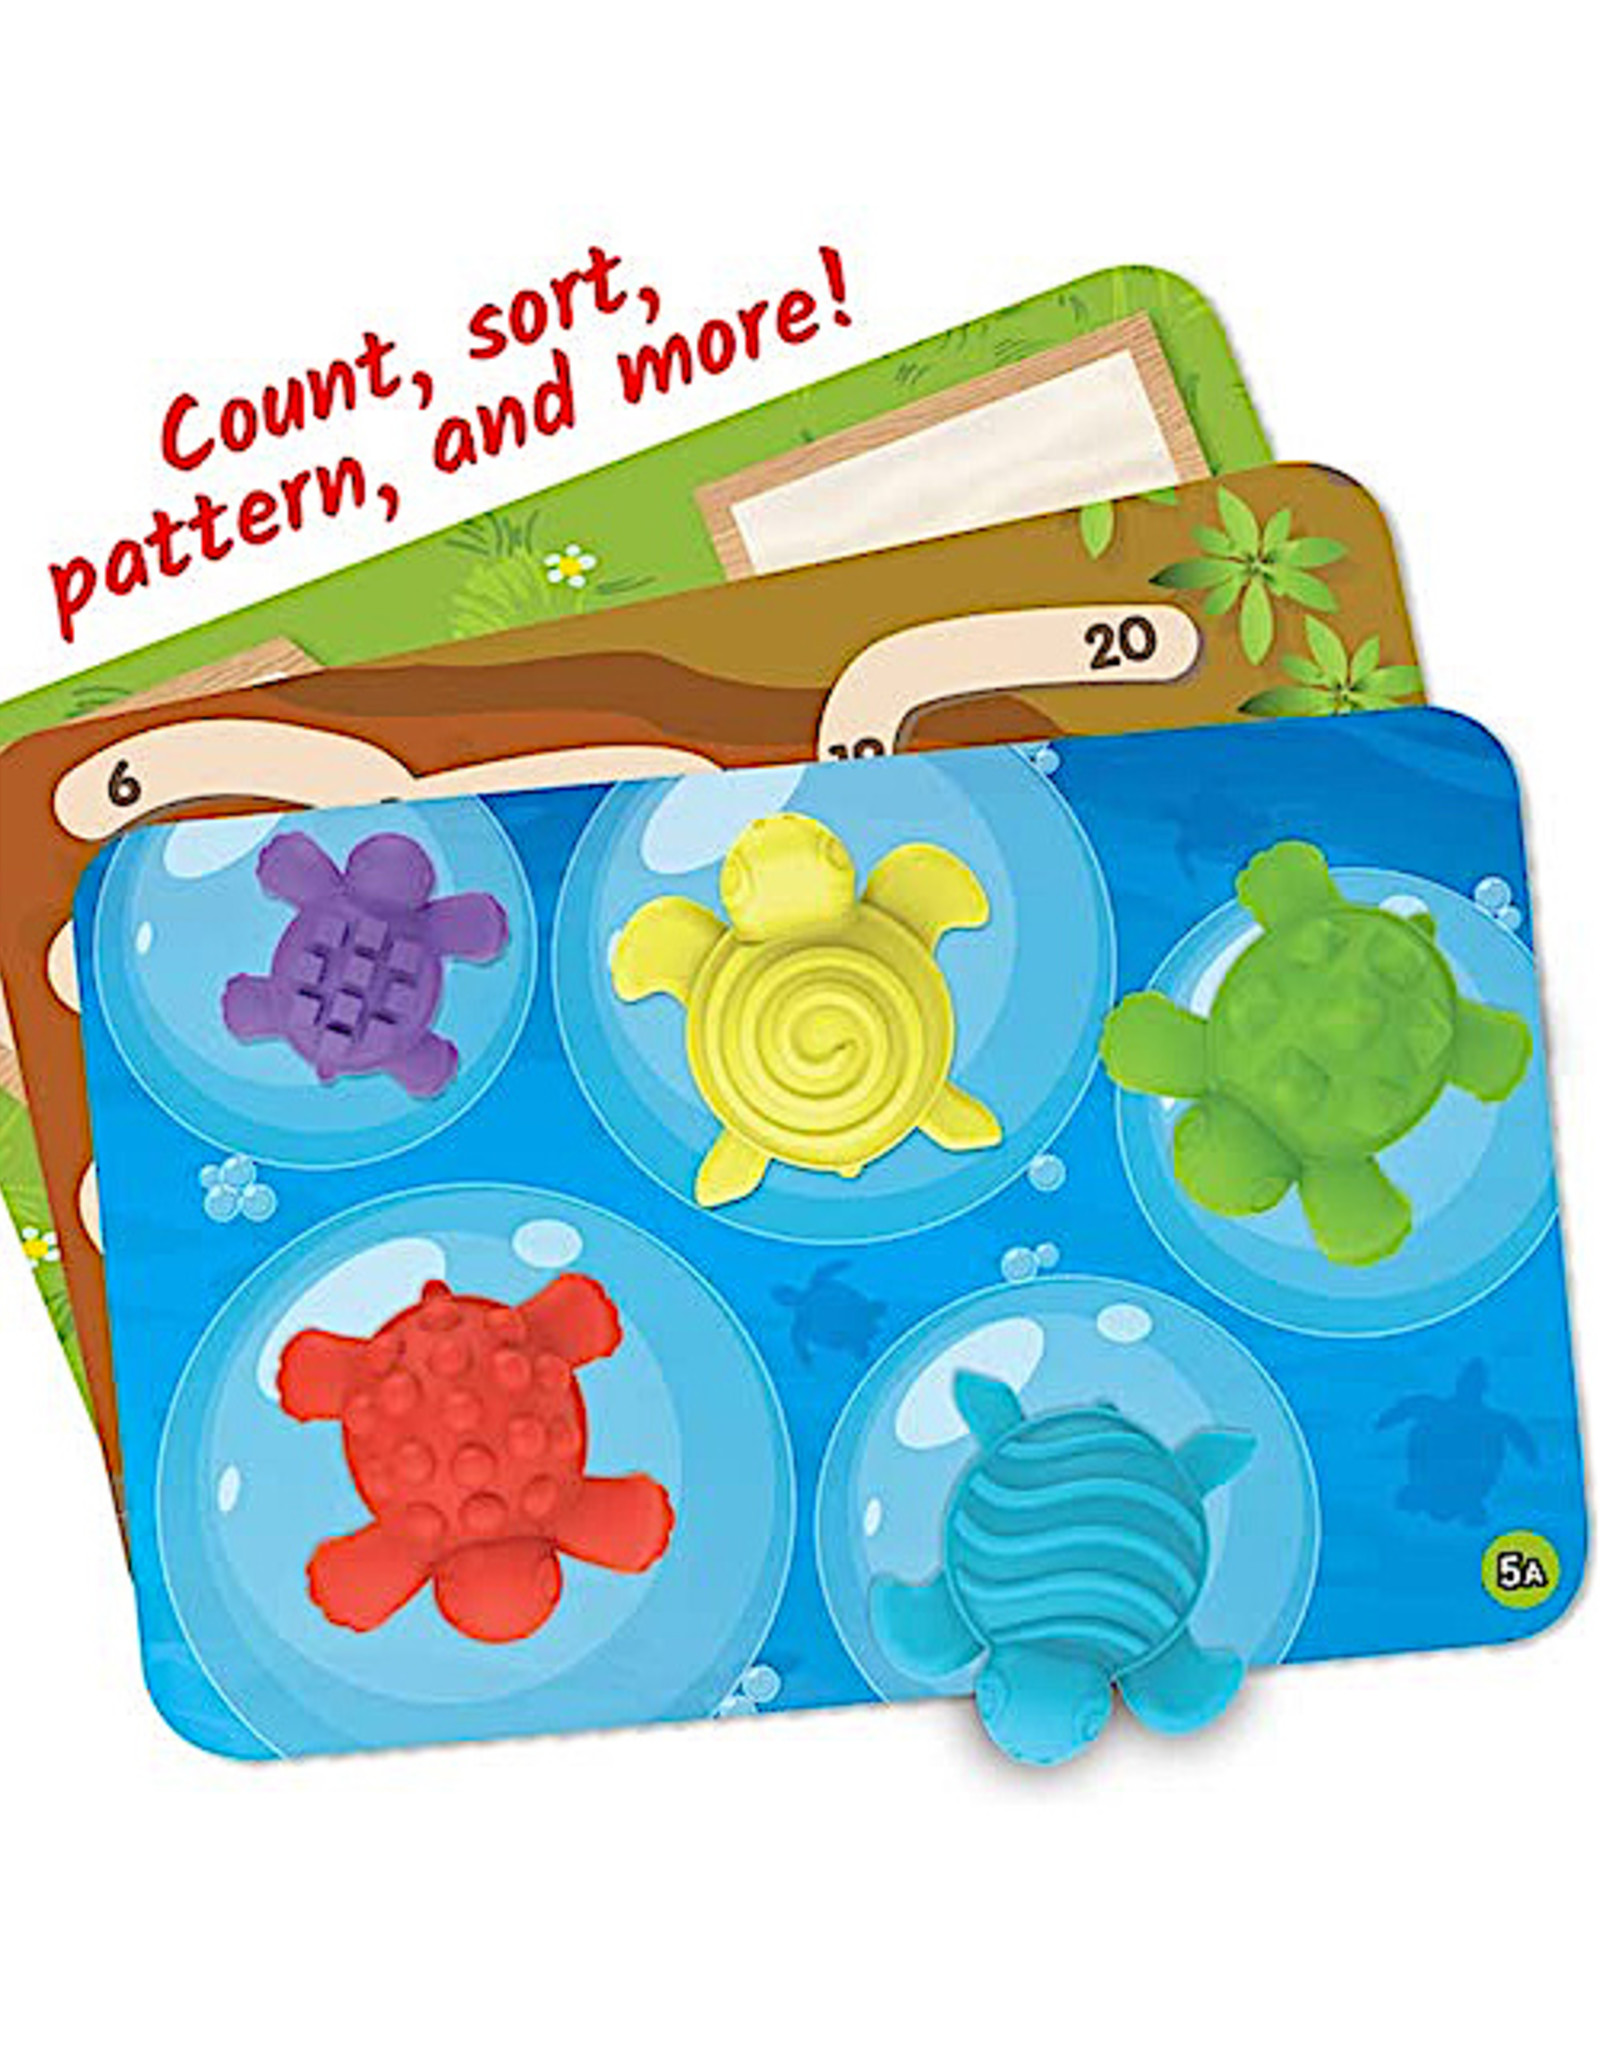 Hand2Mind Tactile Turtles Math Activity Set